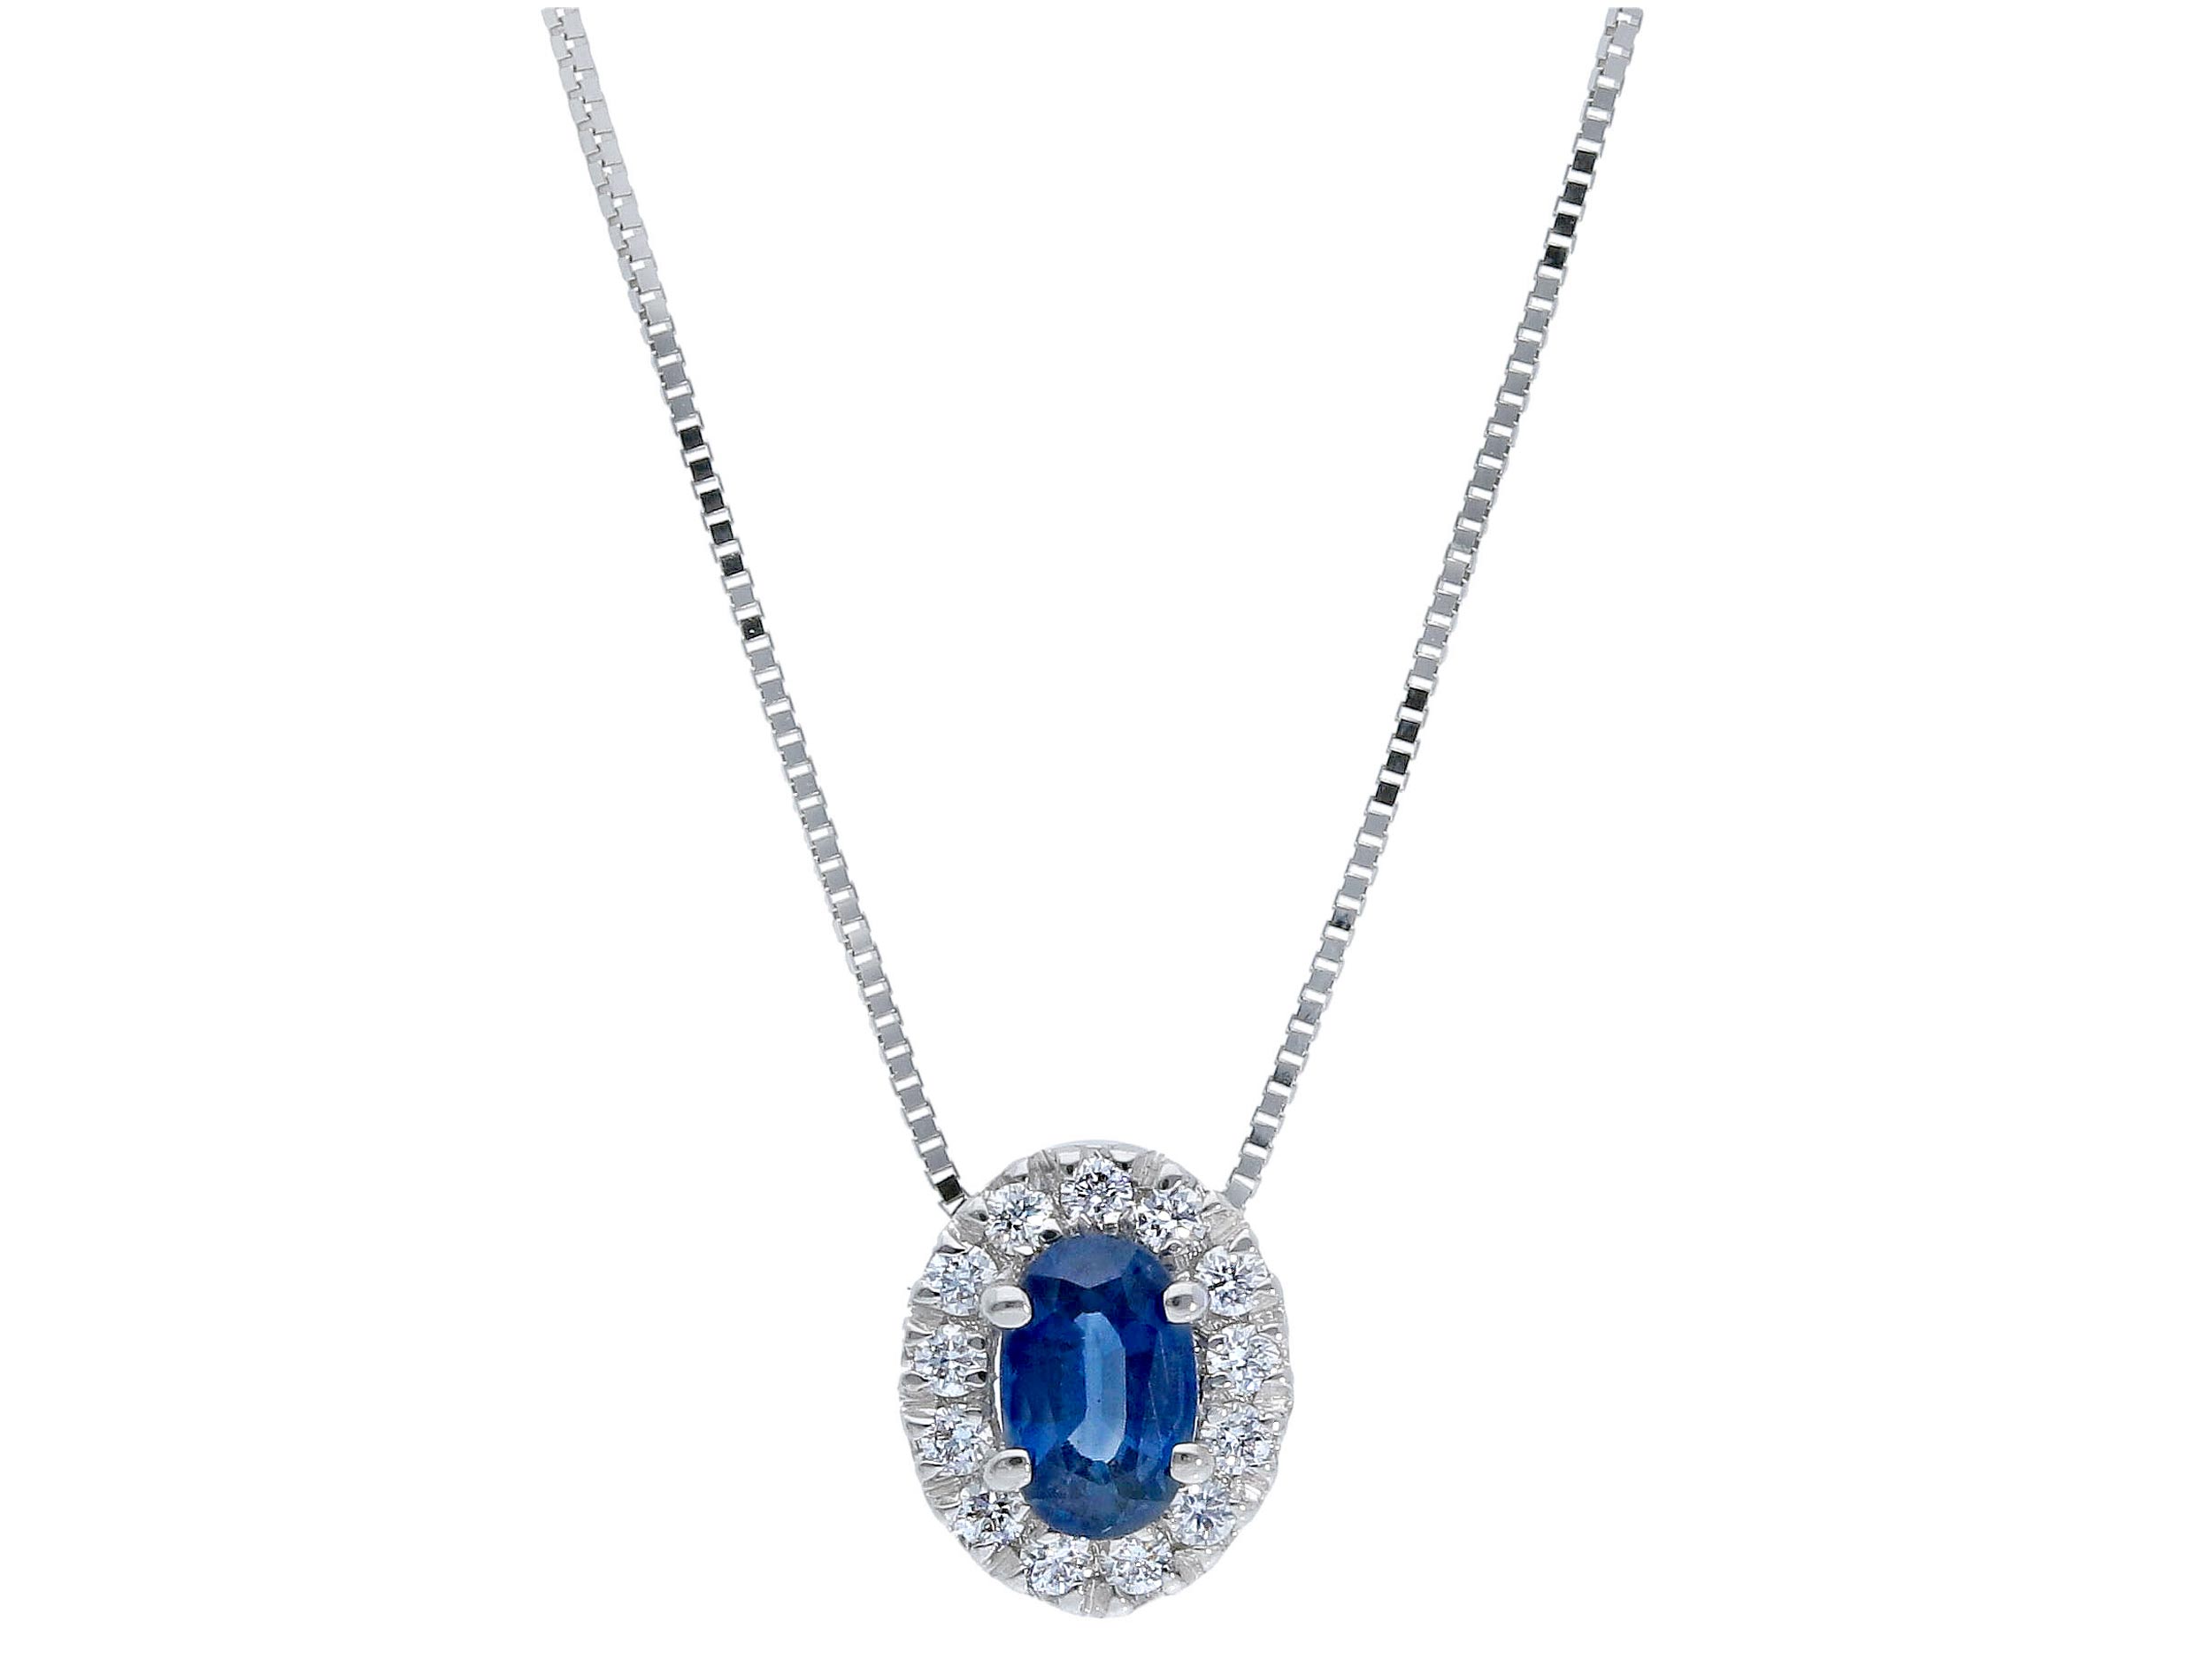 Blue sapphire pendant white gold 750% Art. 225820